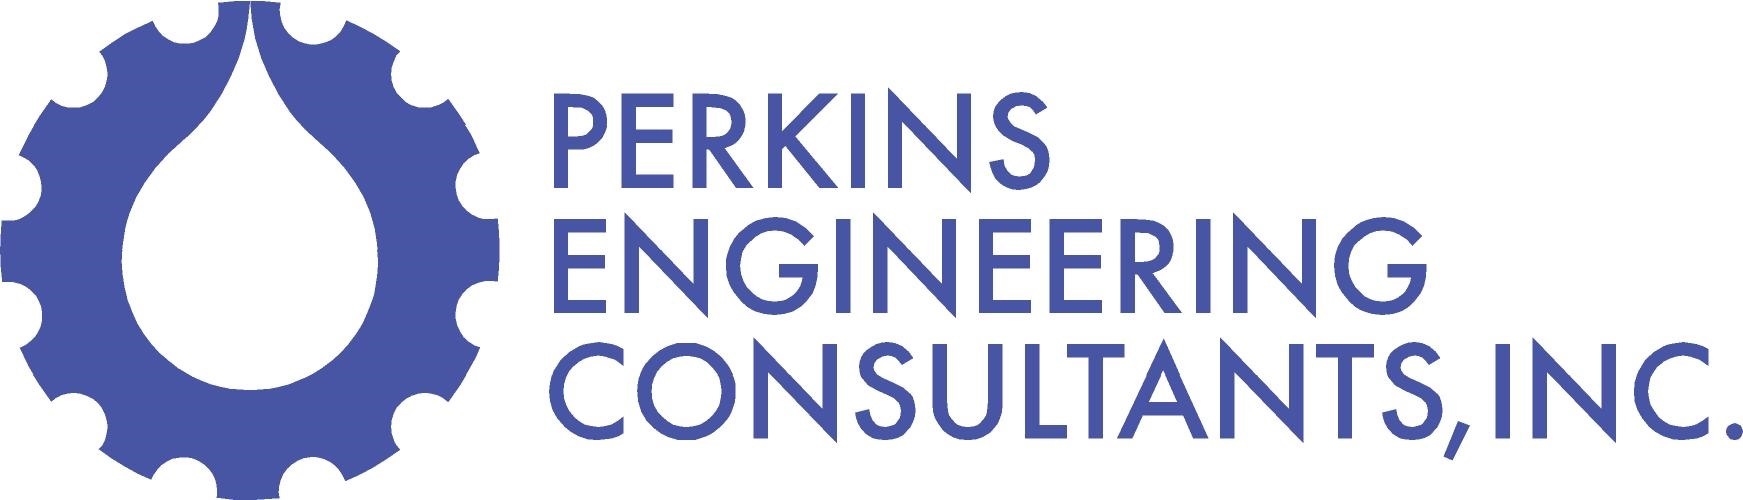 Perkins Engineering Consultants, Inc.